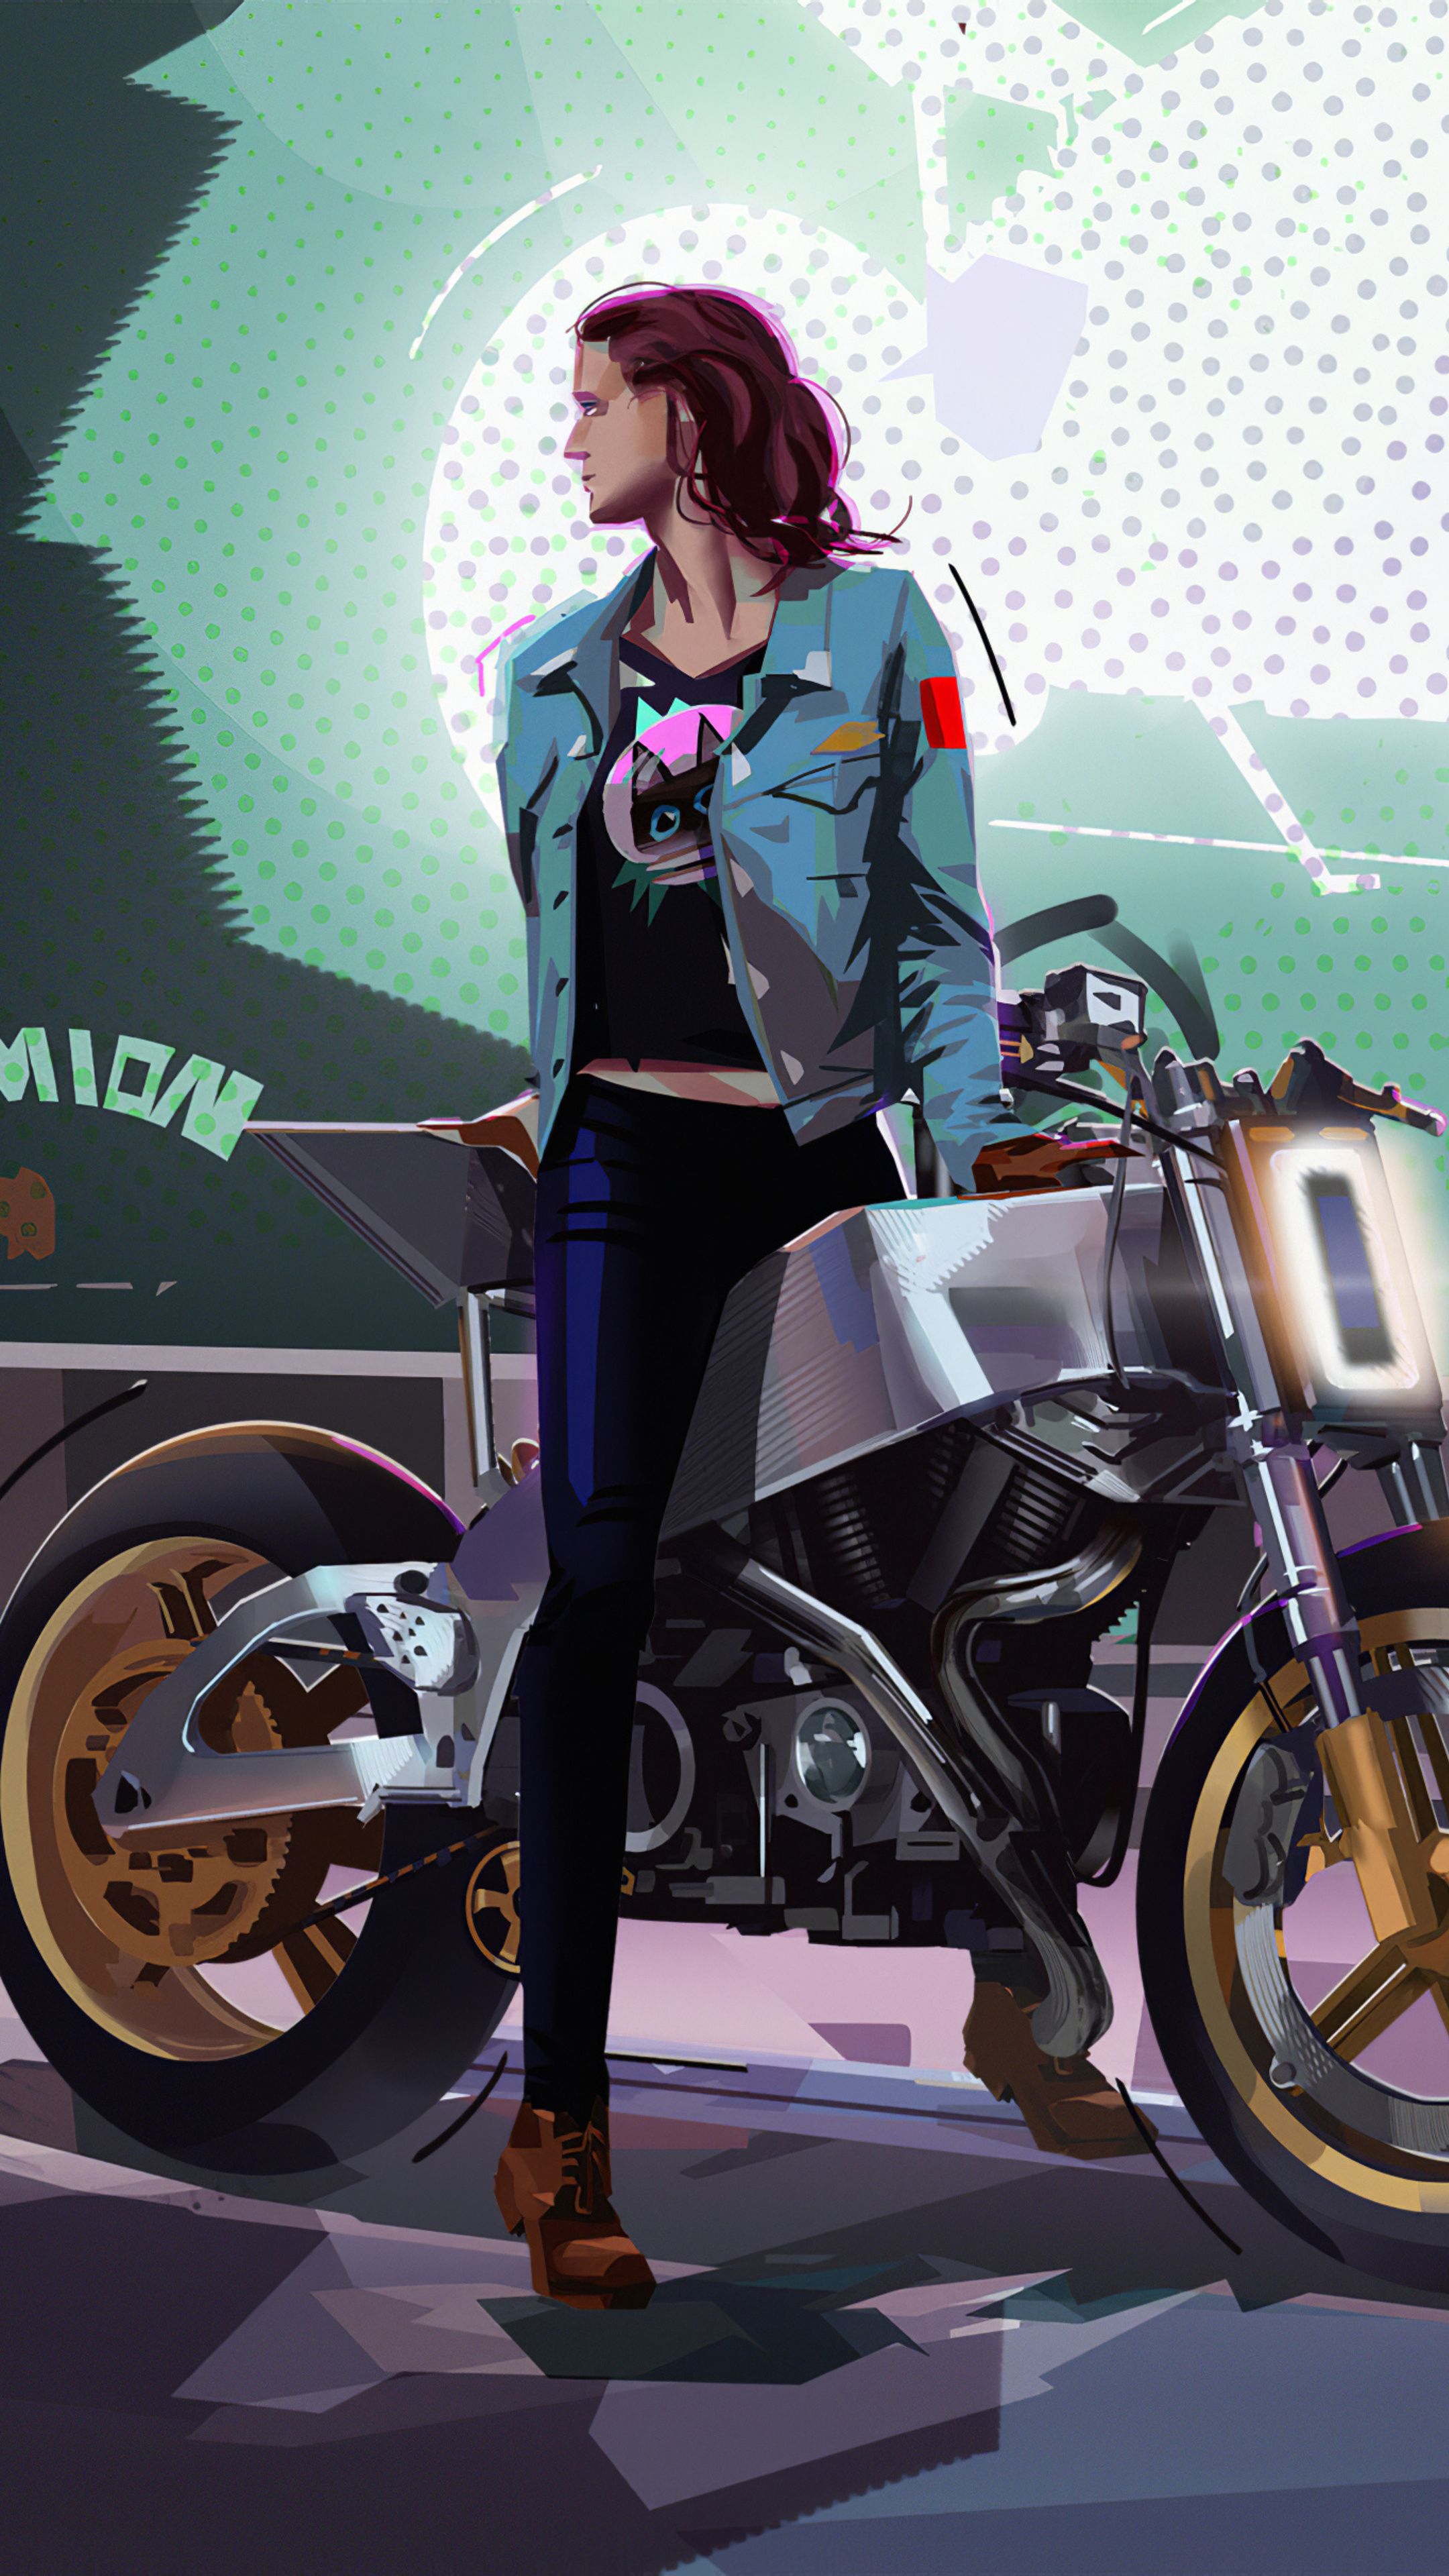 Bike Rider Girl 4k Sony Xperia X, XZ, Z5 Premium HD 4k Wallpaper, Image, Background, Photo and Picture